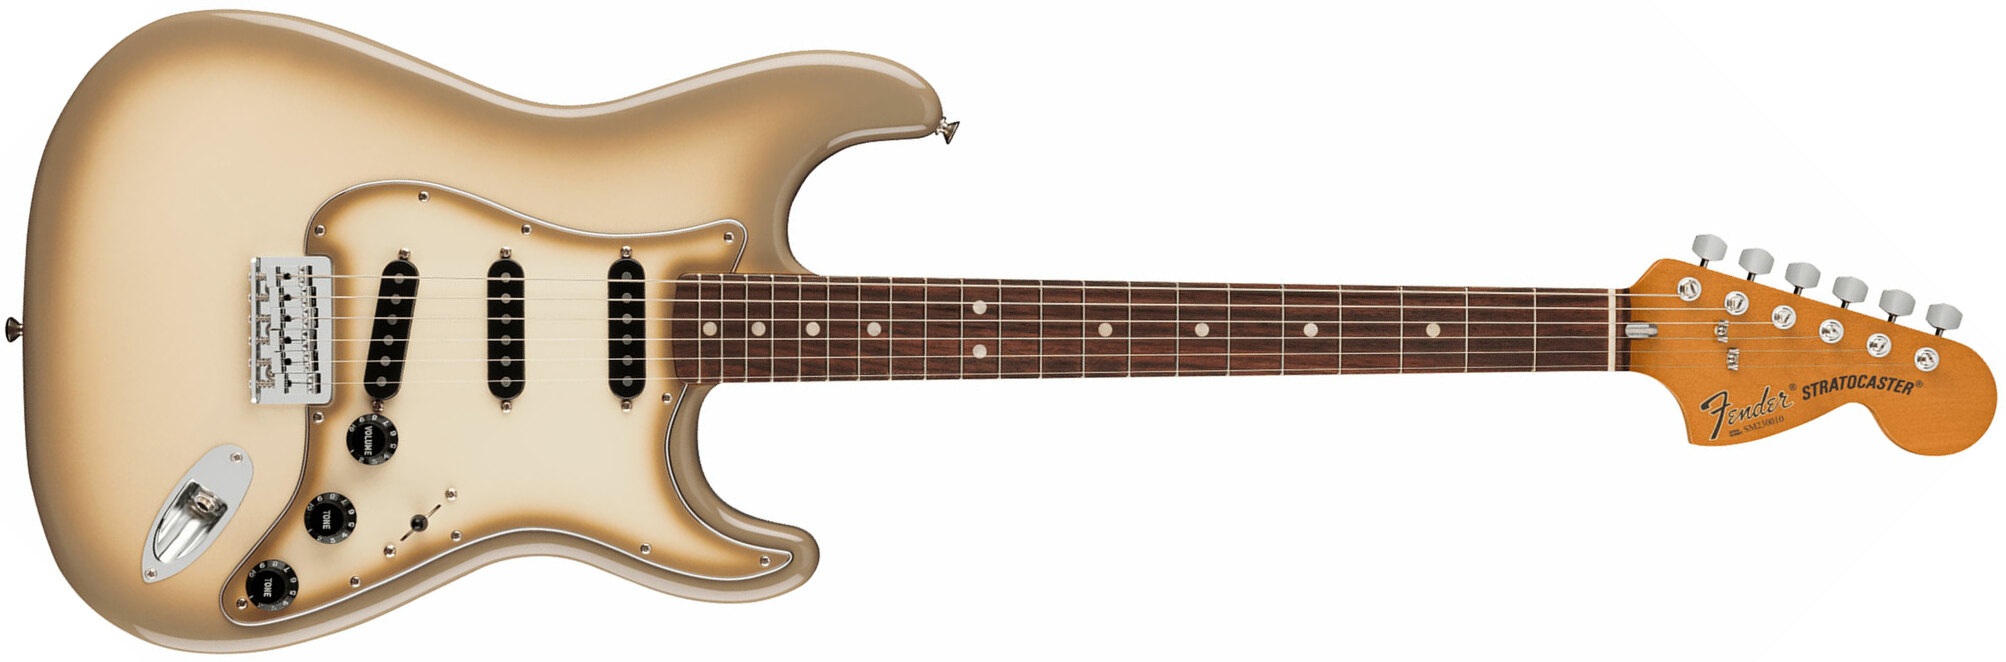 Fender Strat Antigua 70th Anniversary Vintera 2 Mex 3s Ht Rw - Antigua - Str shape electric guitar - Main picture